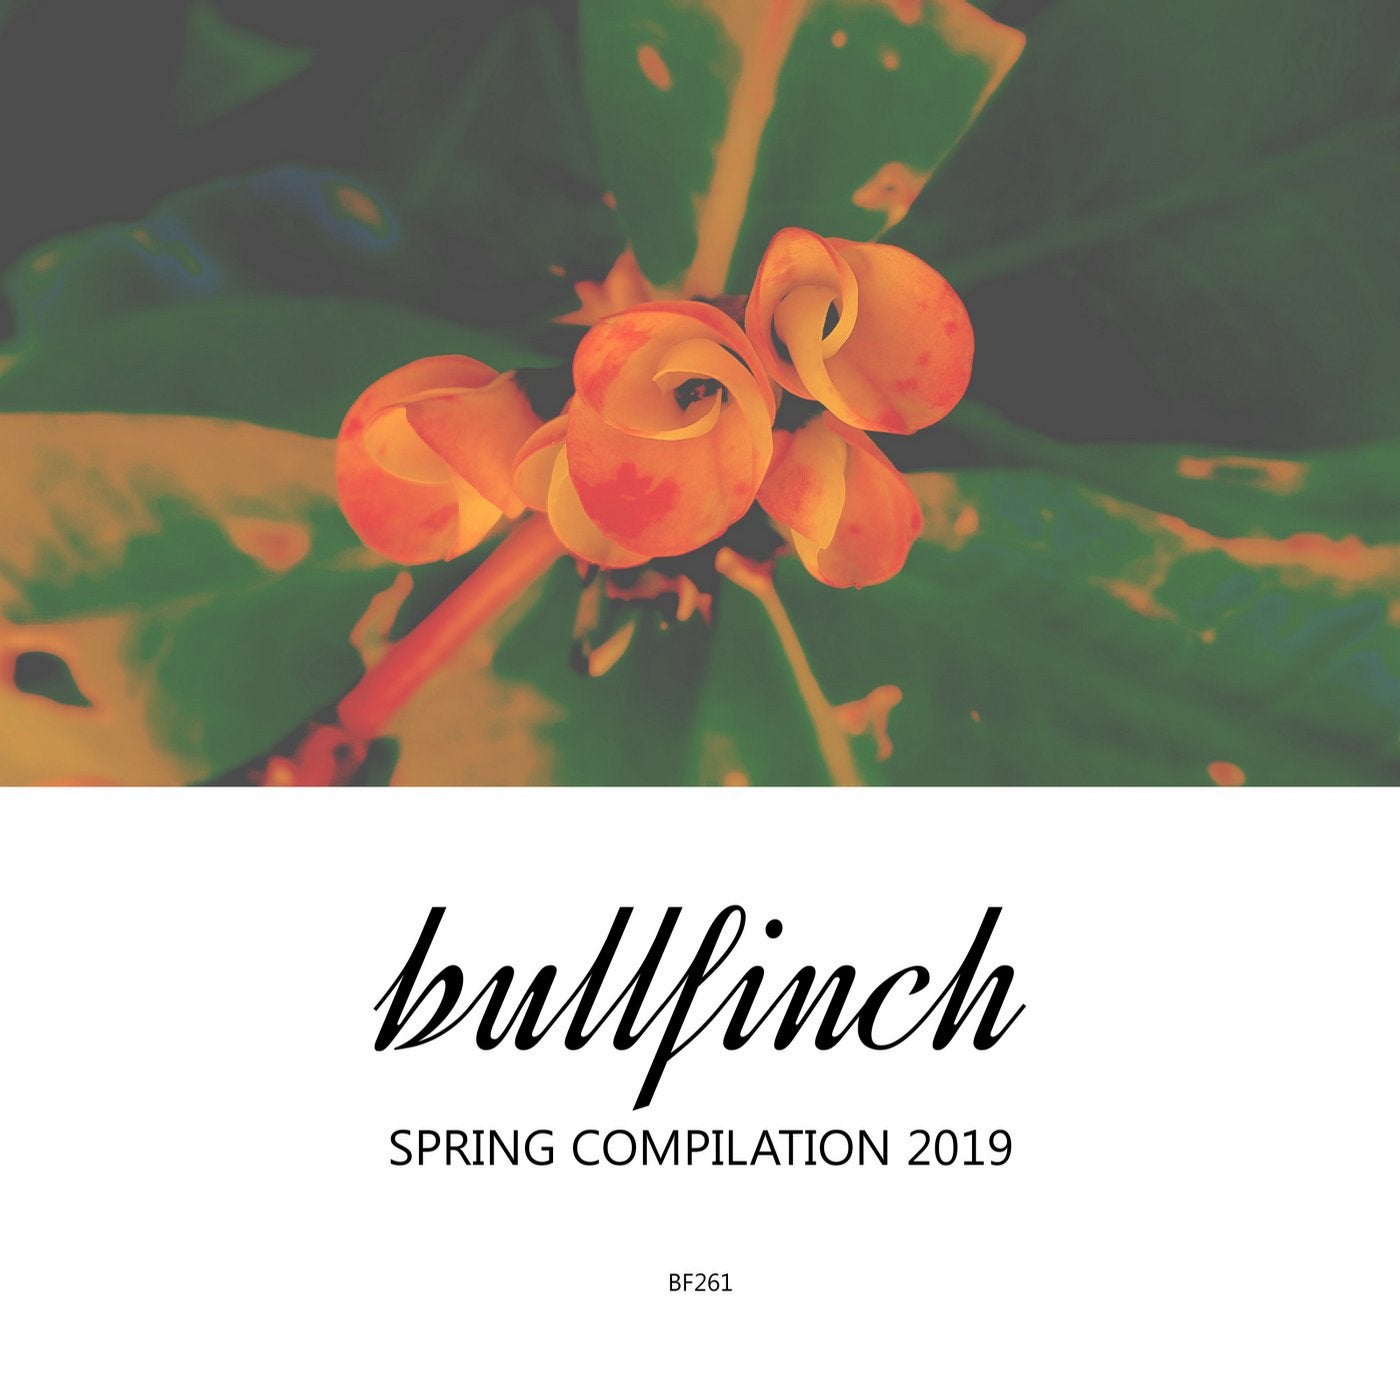 Bullfinch Spring 2019 Compilation